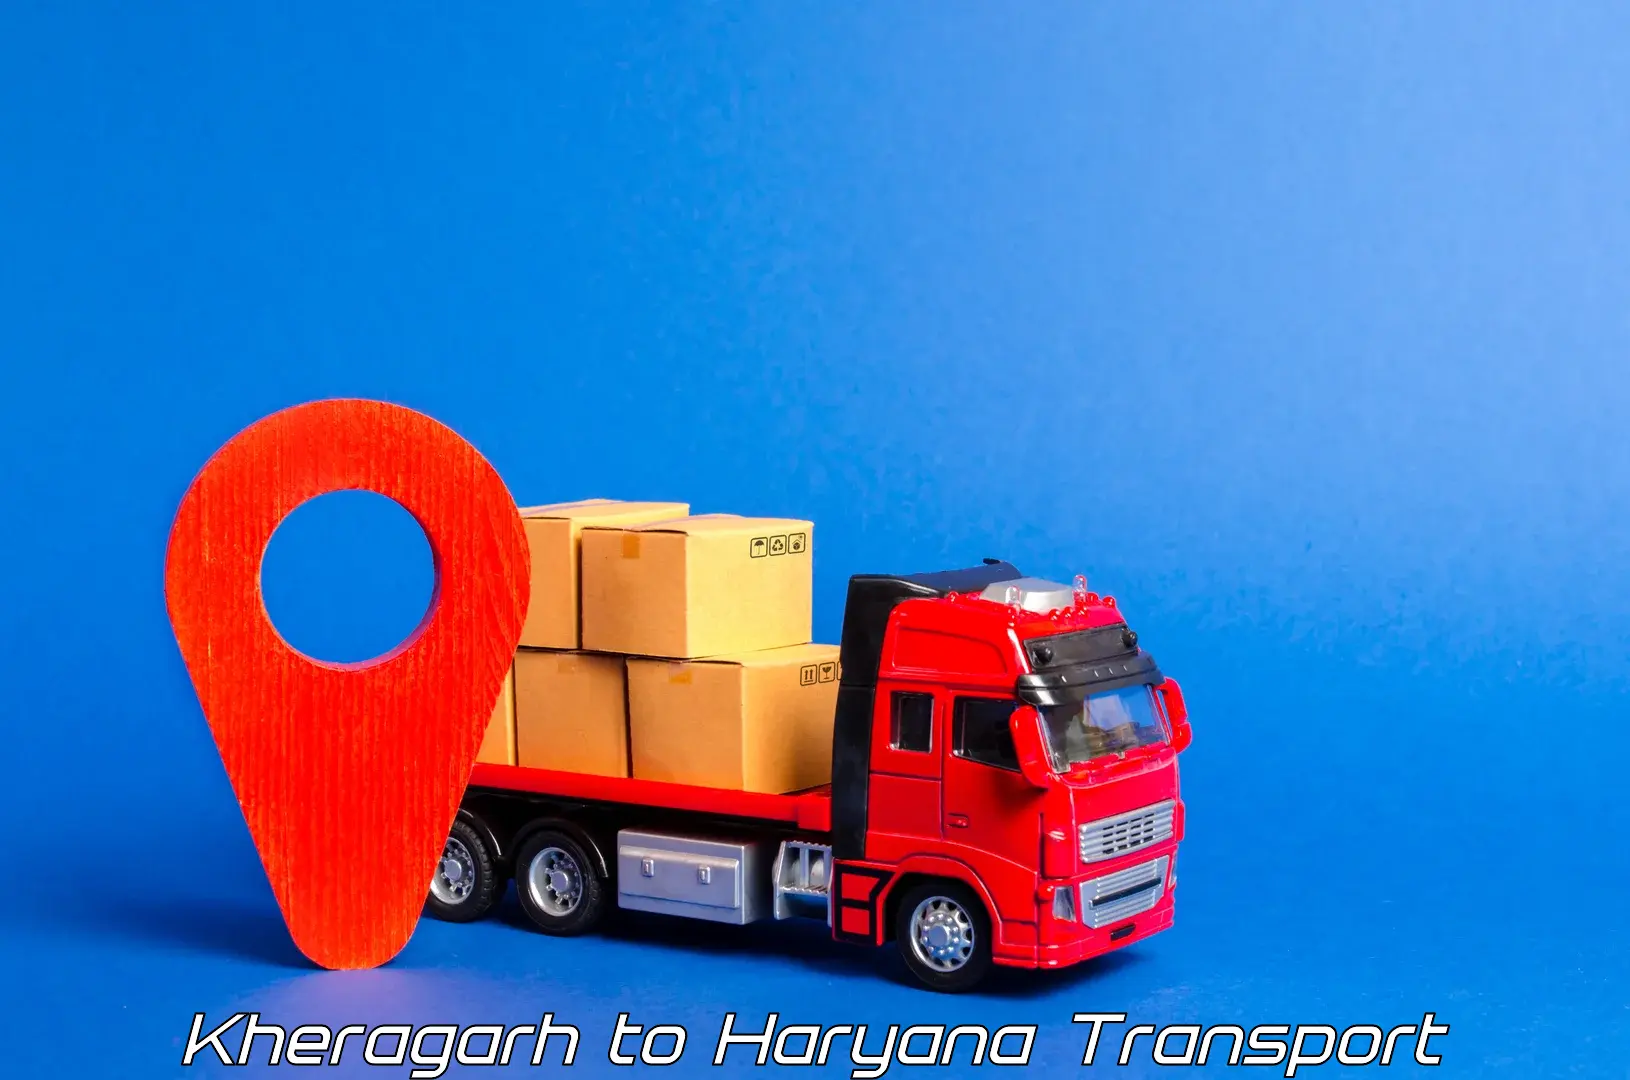 Lorry transport service Kheragarh to Haryana